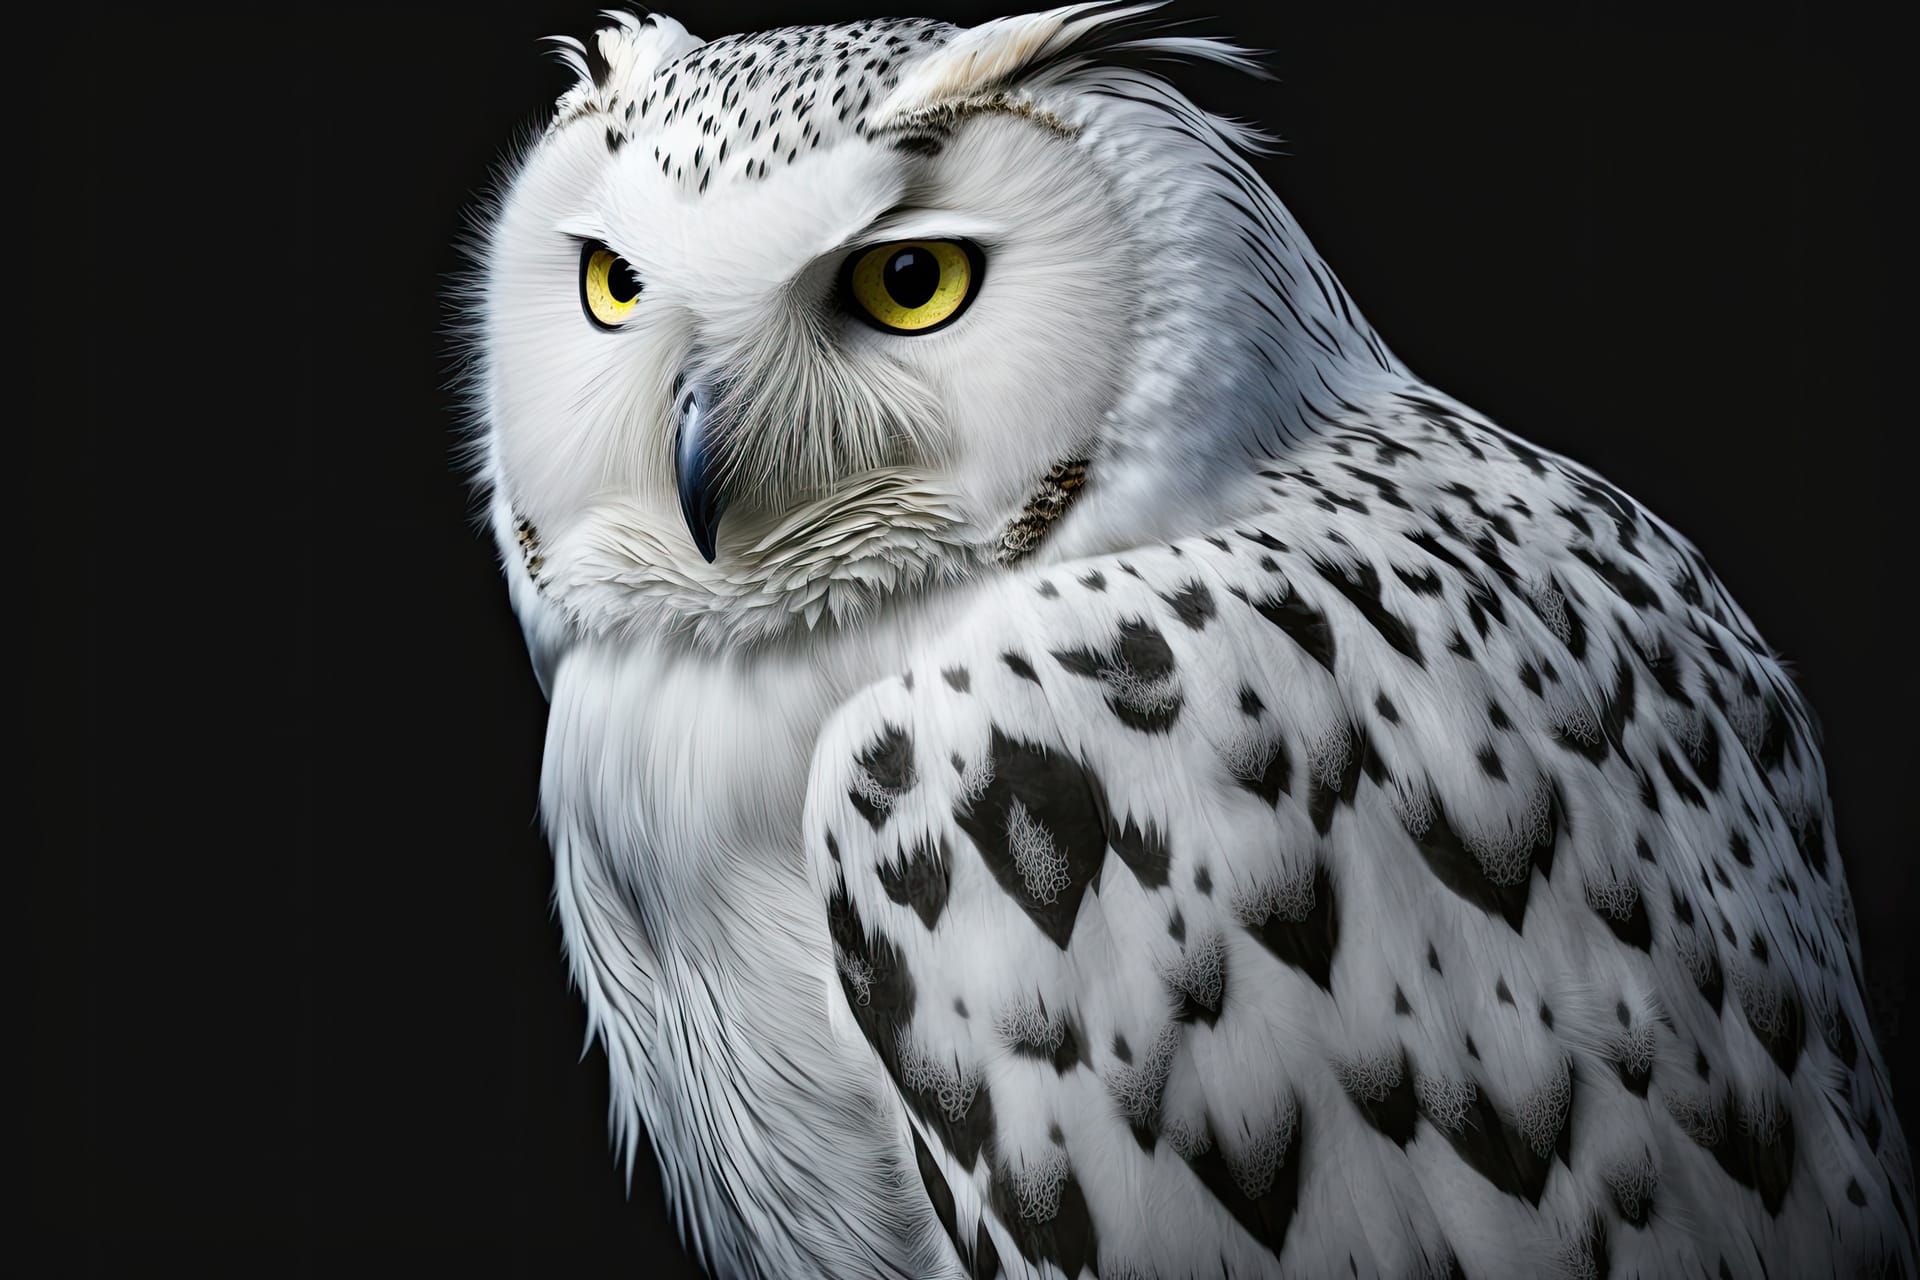 Owl black background closeup owl portrait animal closeup animal portrait